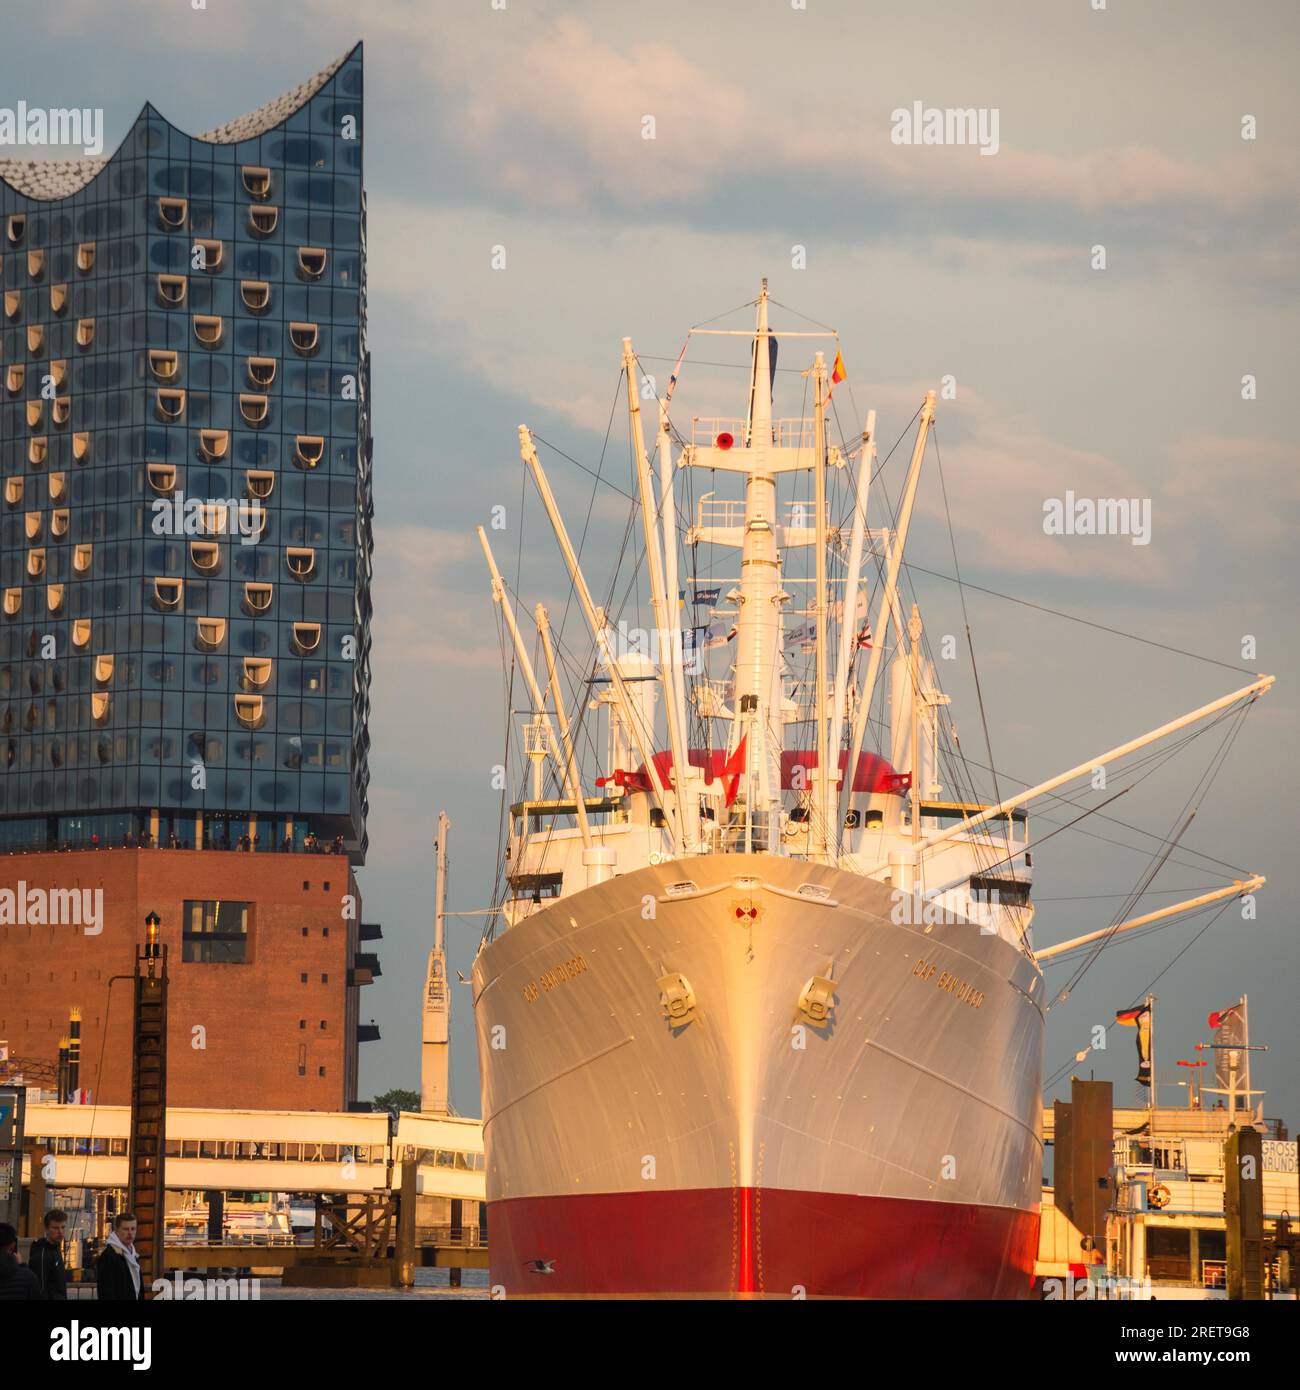 MS Cap San Diego in the port of Hamburg Stock Photo